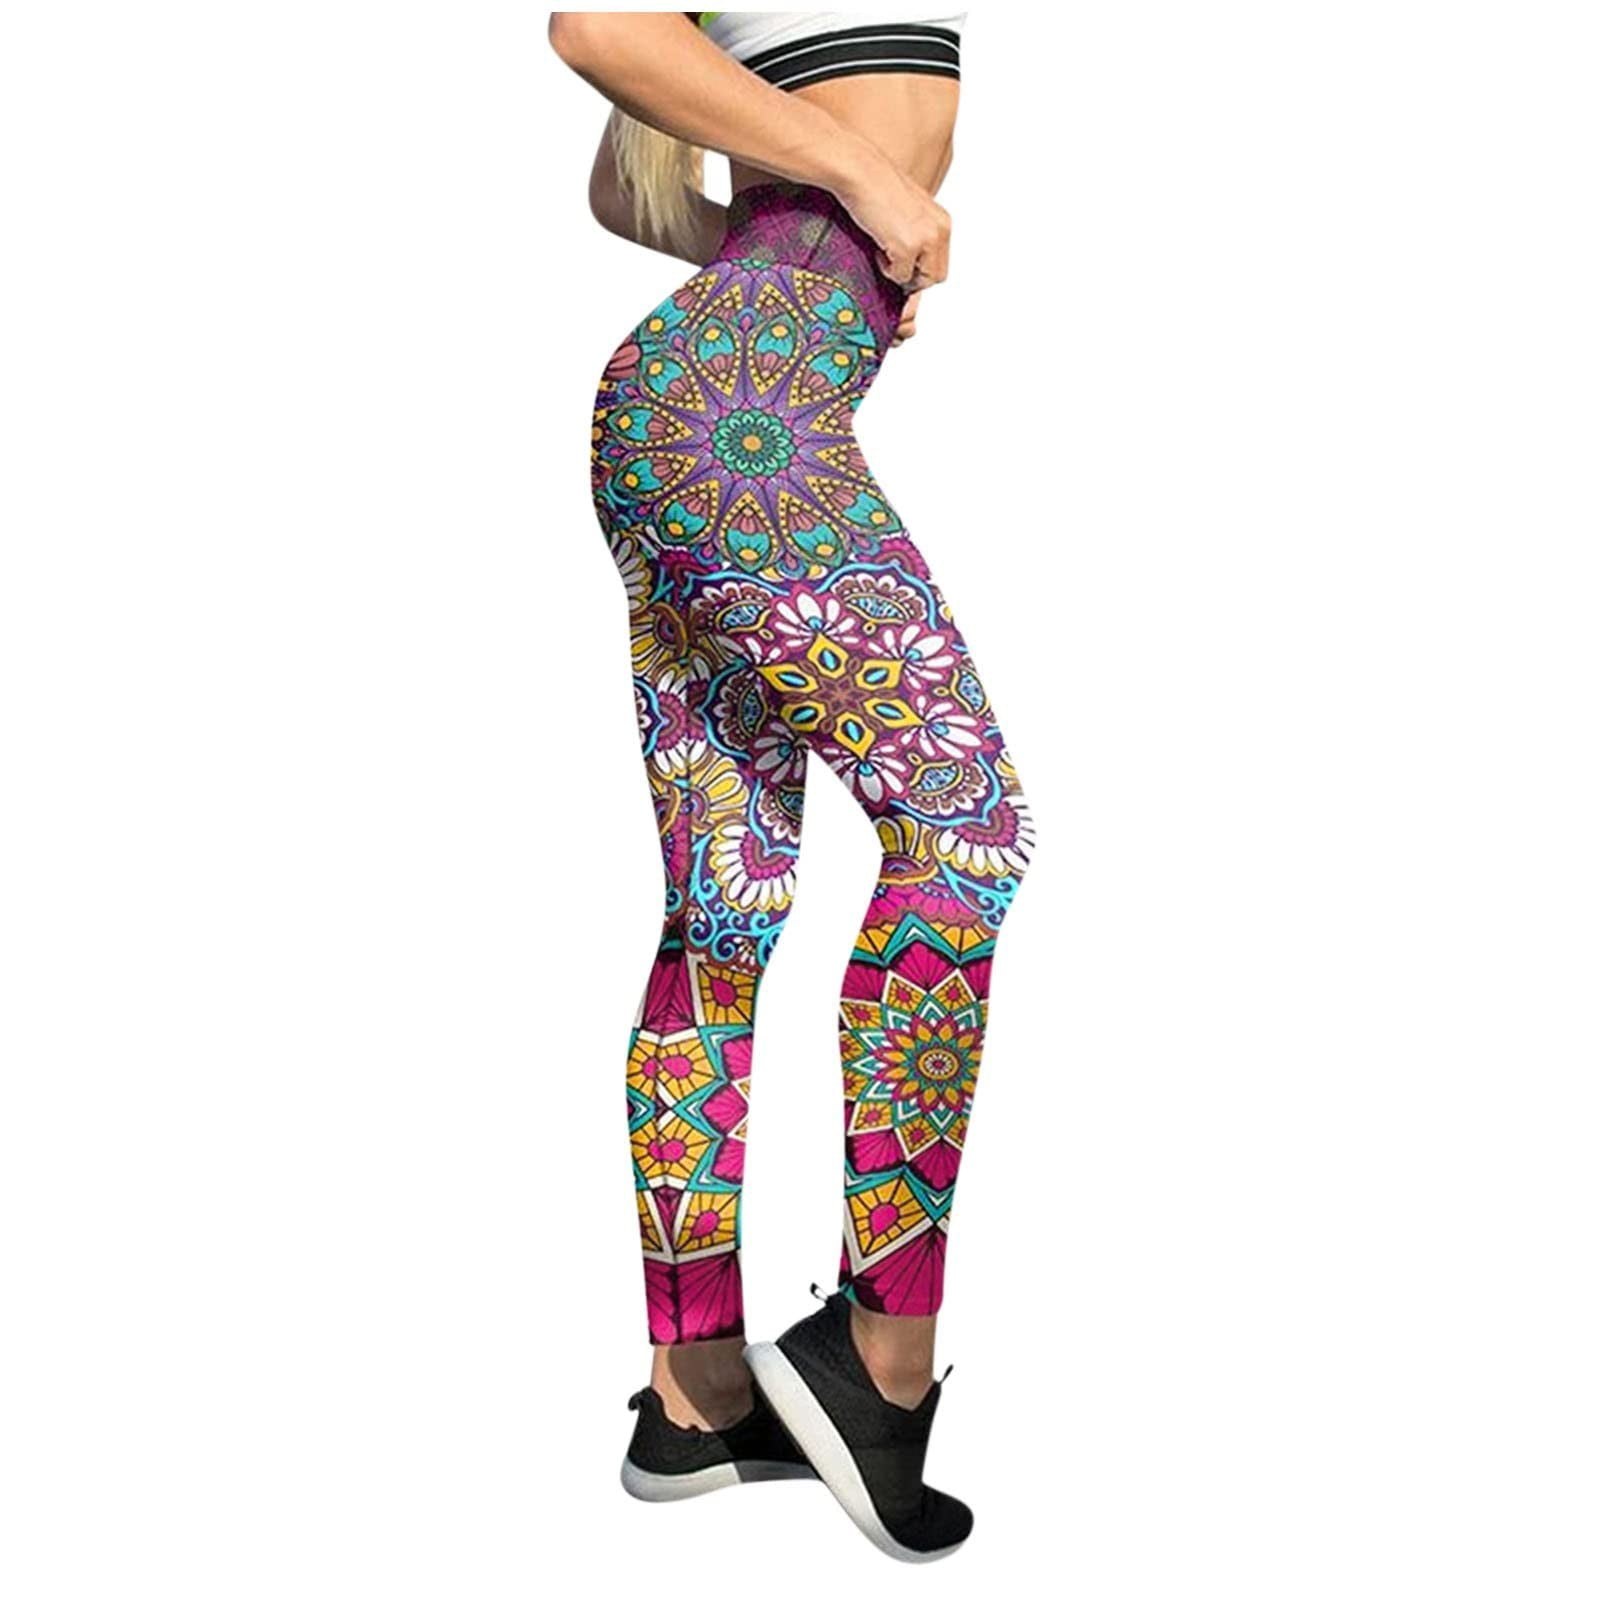 YYDGH High Waist Yoga Pants for Women with Pockets Floral Print Butt  Lifting Running Sports Workout Leggings Black M - Walmart.com